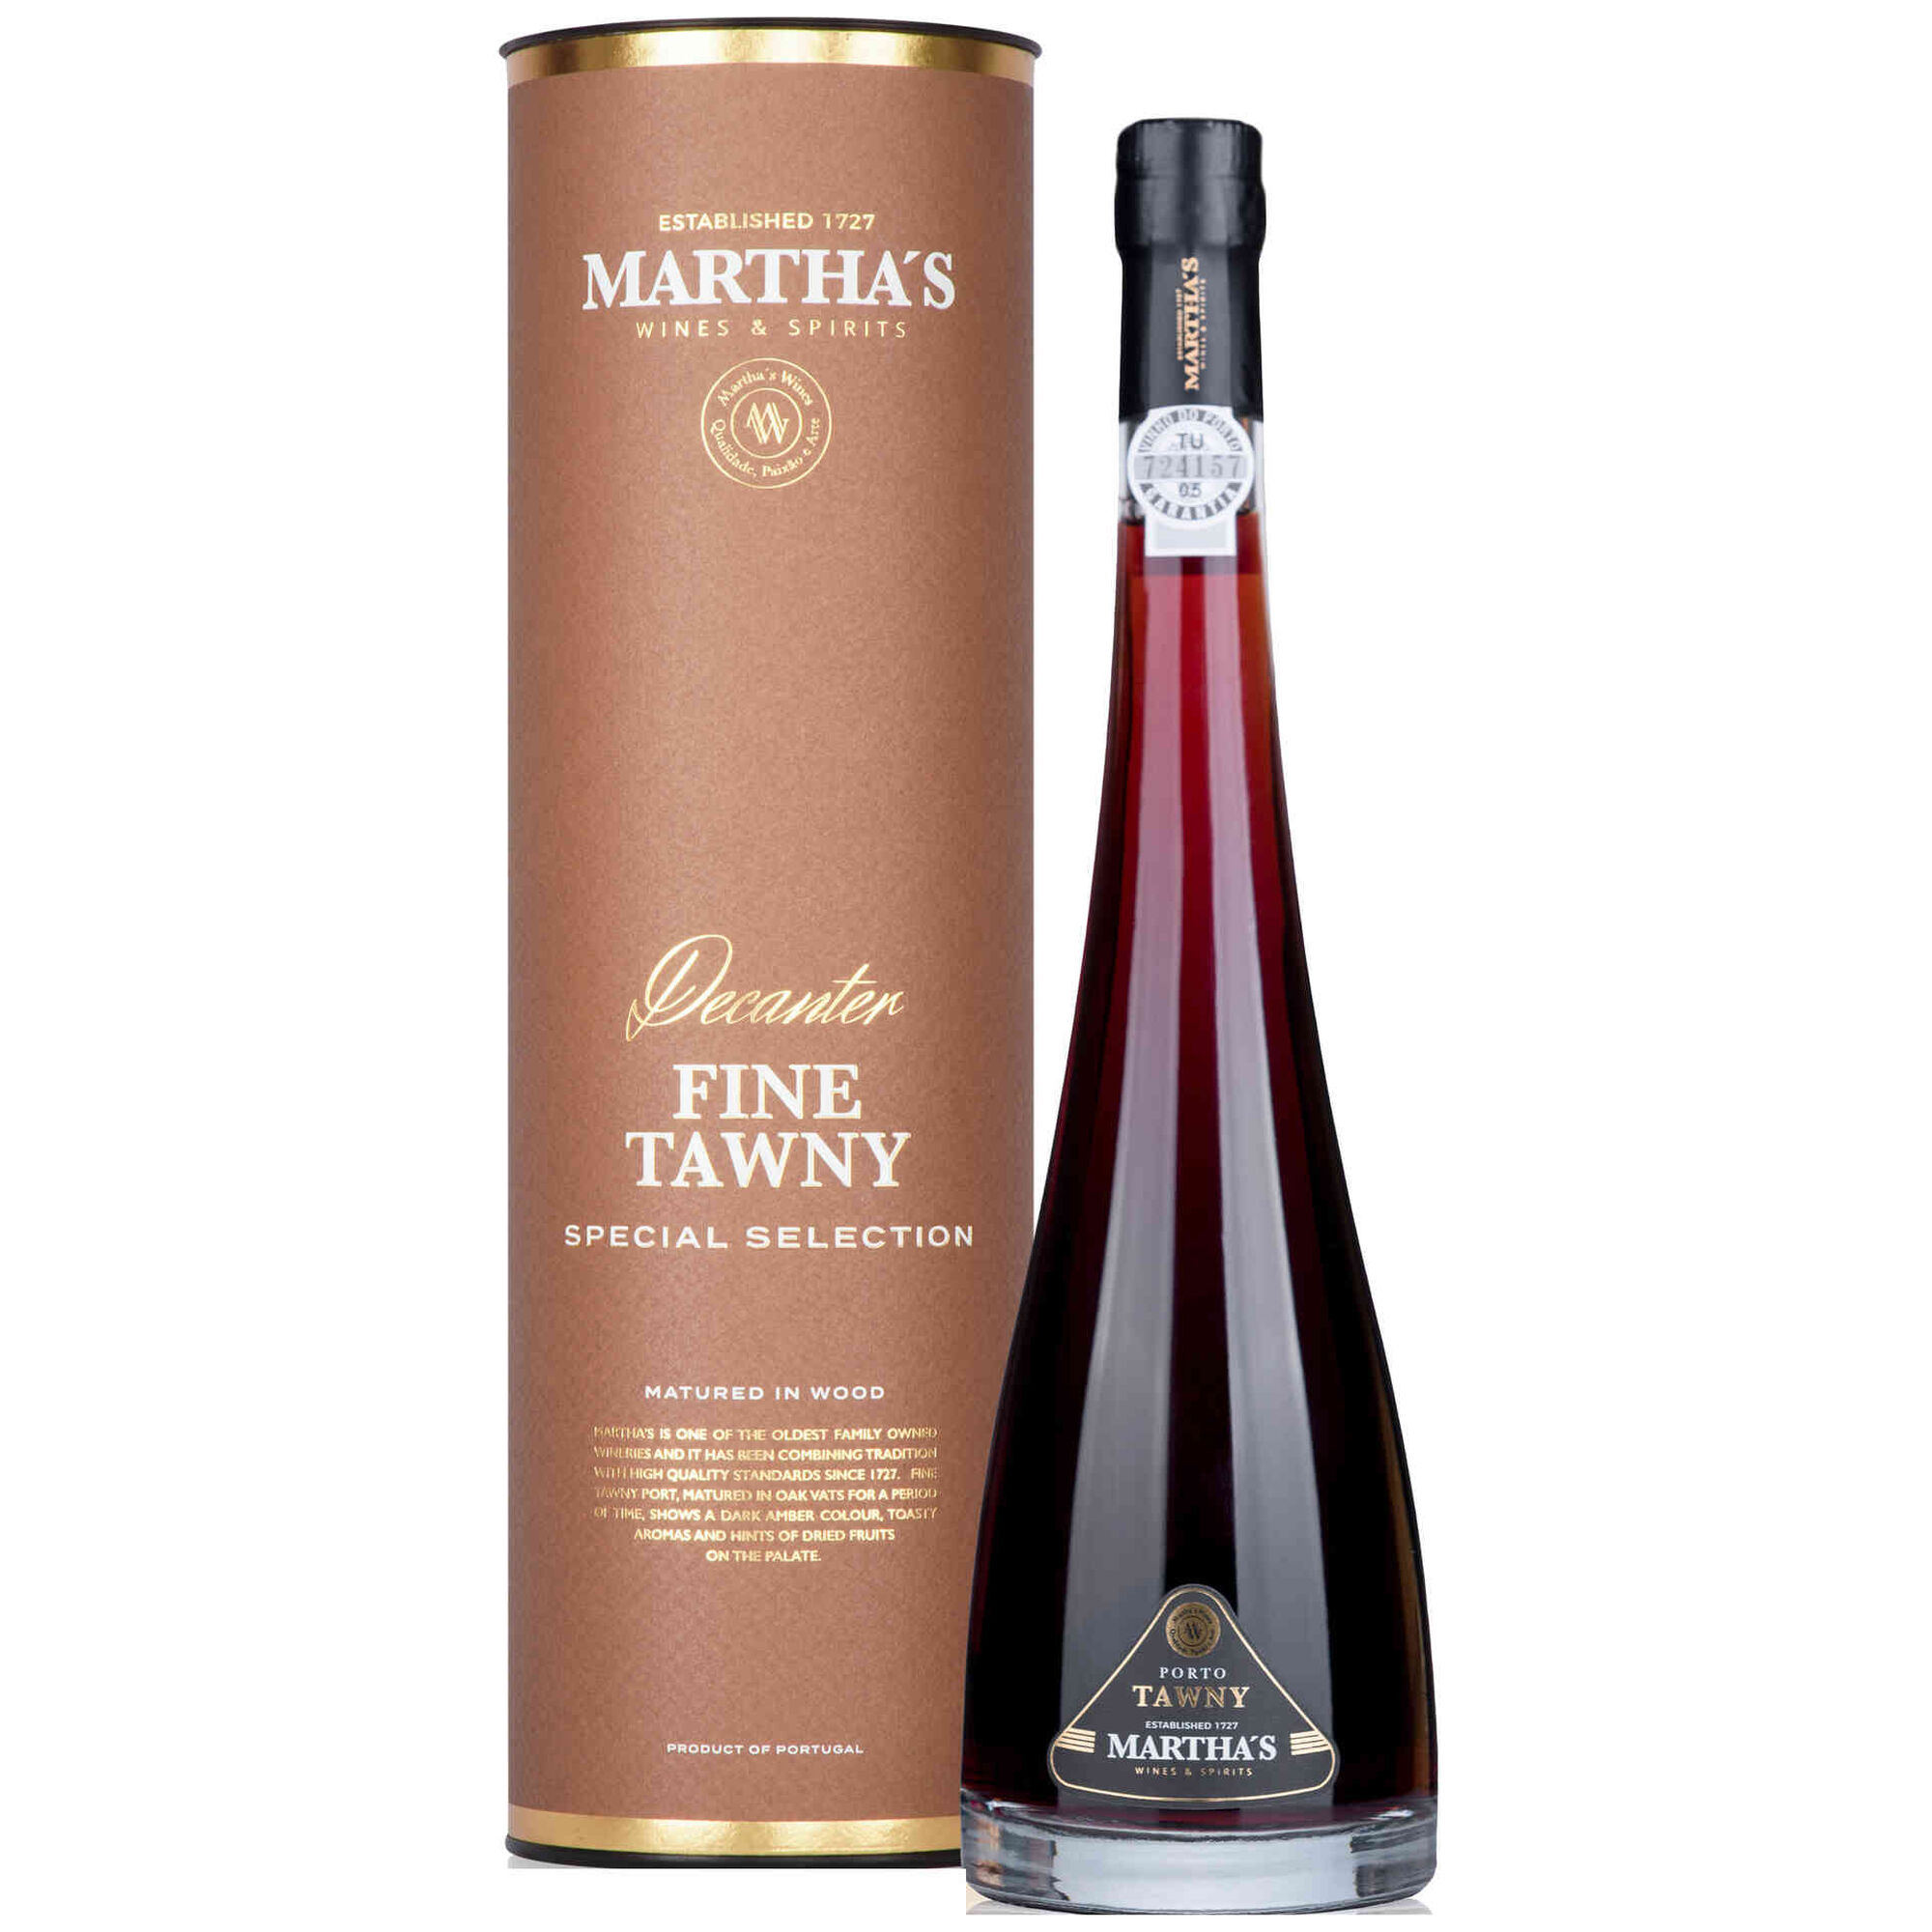 Martha's Vinho do Porto Tawny